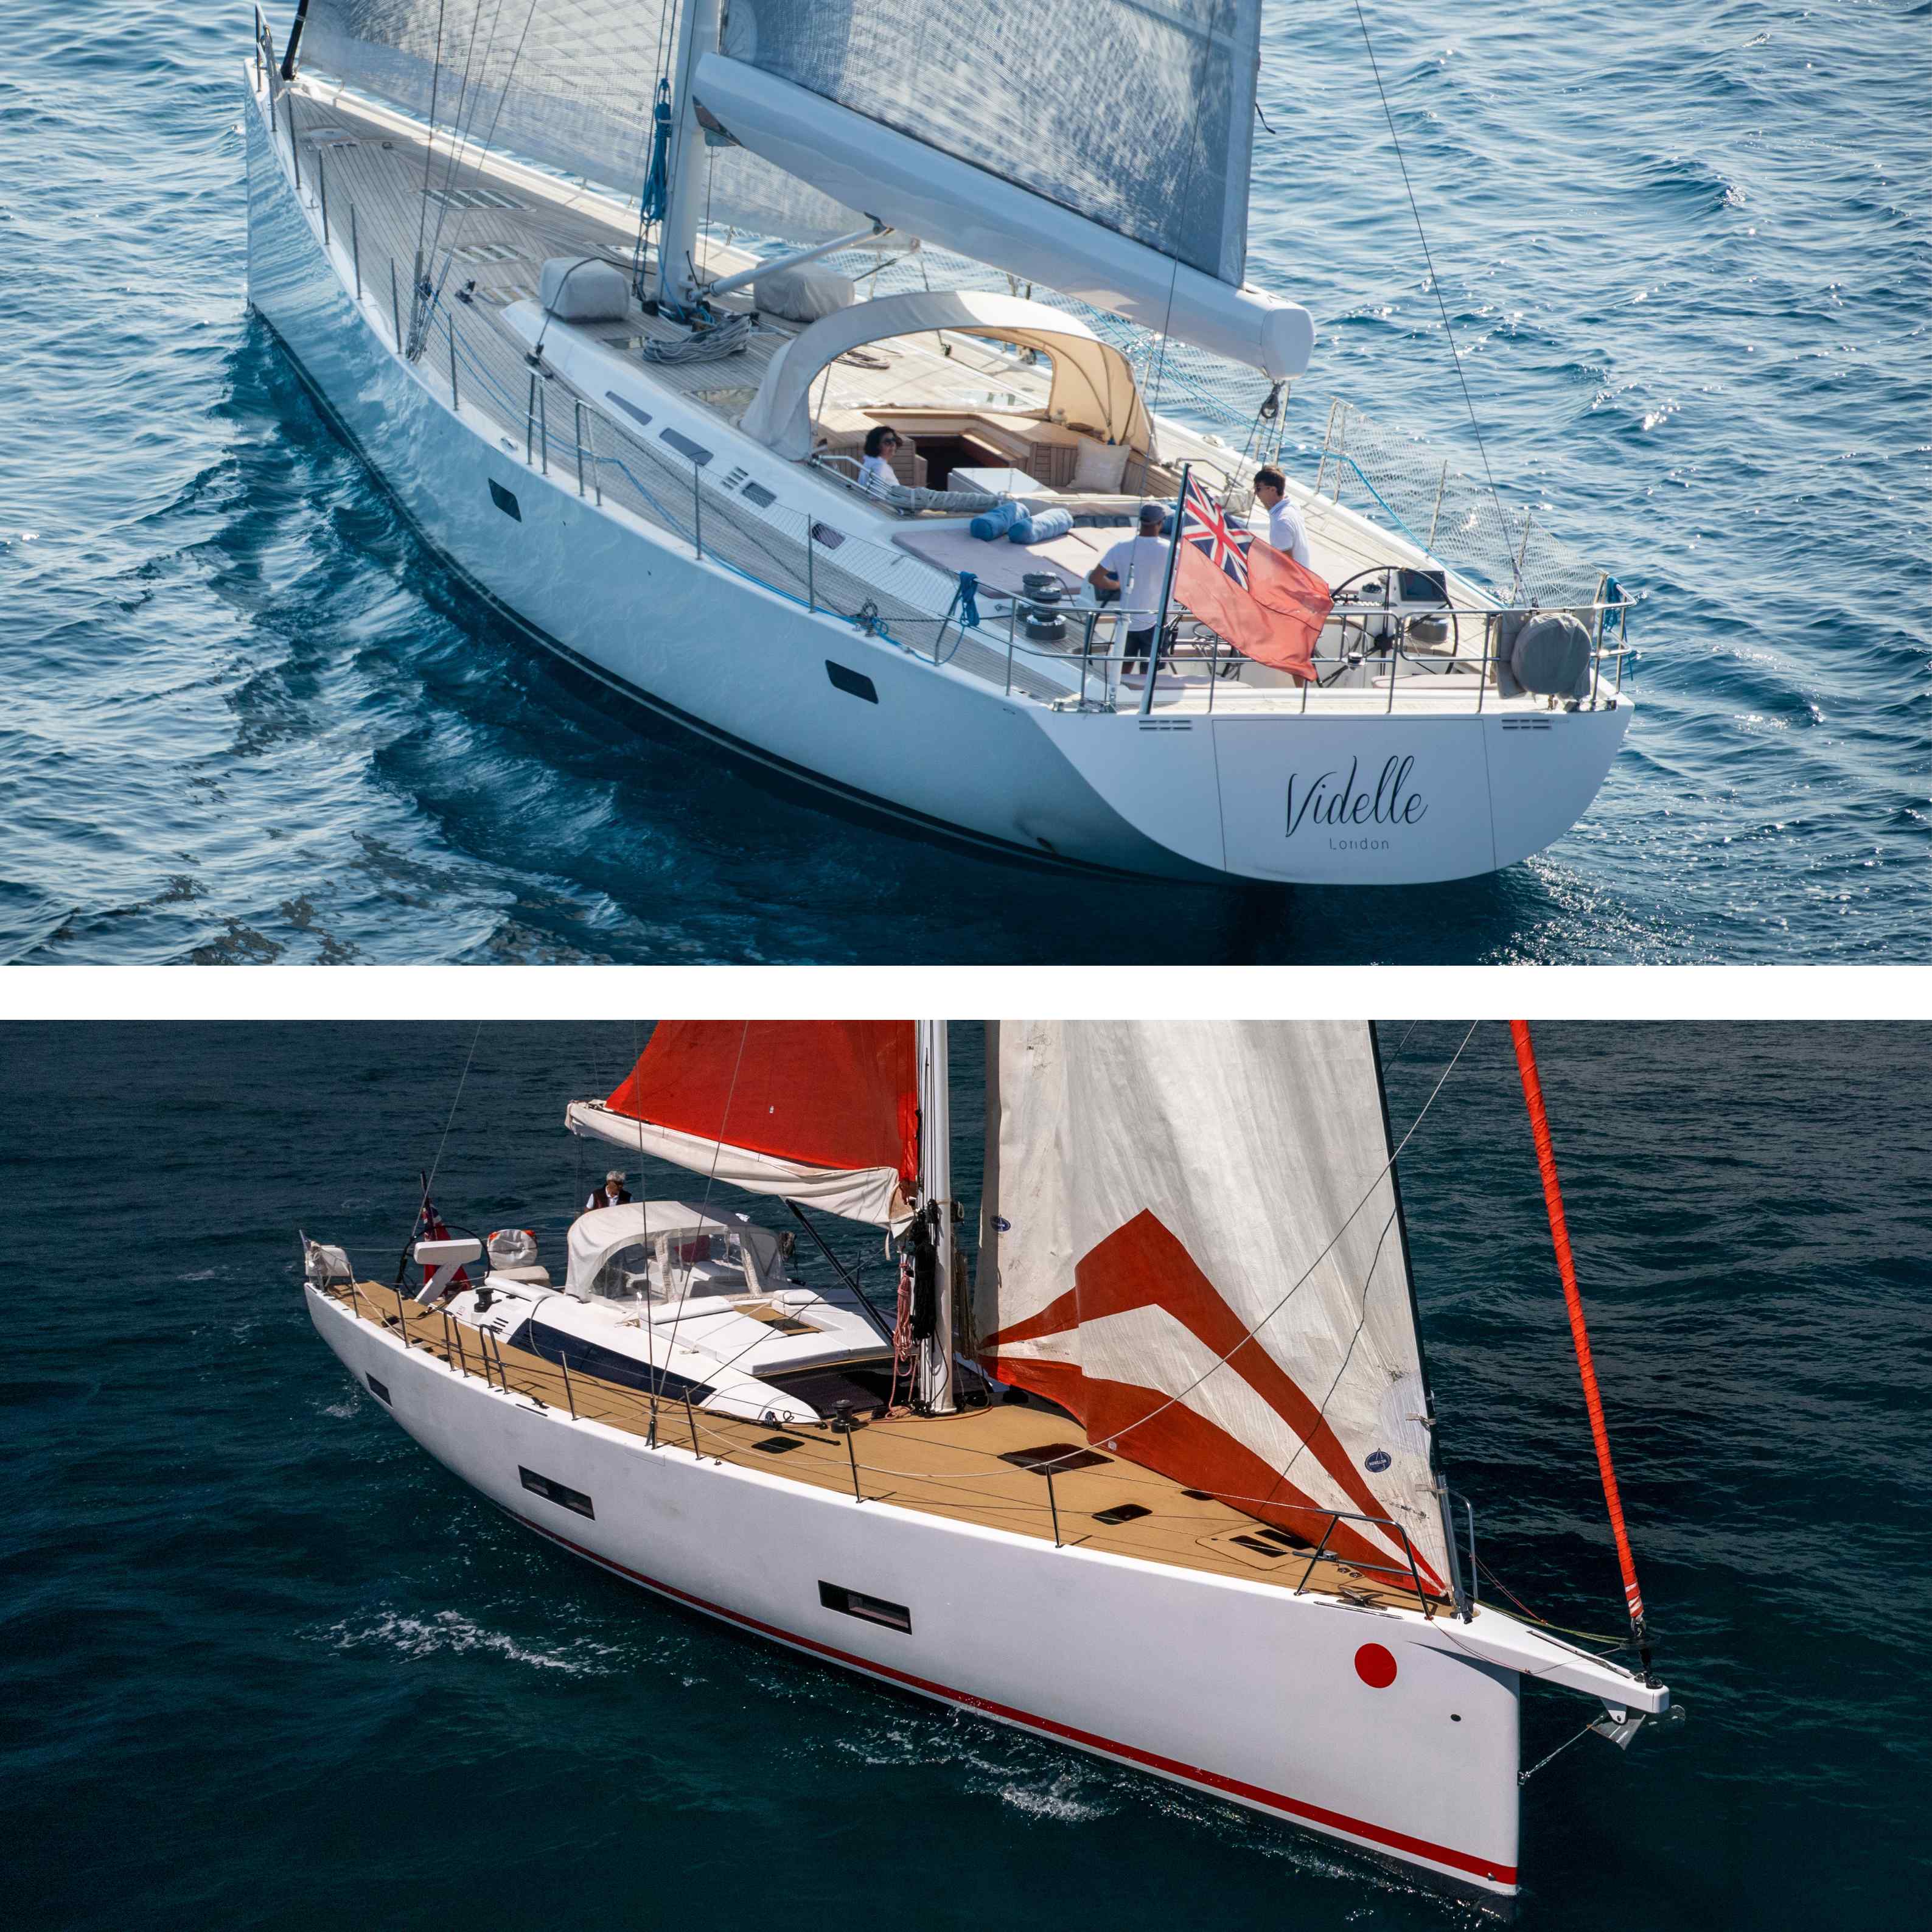 Charter an Umberto Felci Yacht this Summer